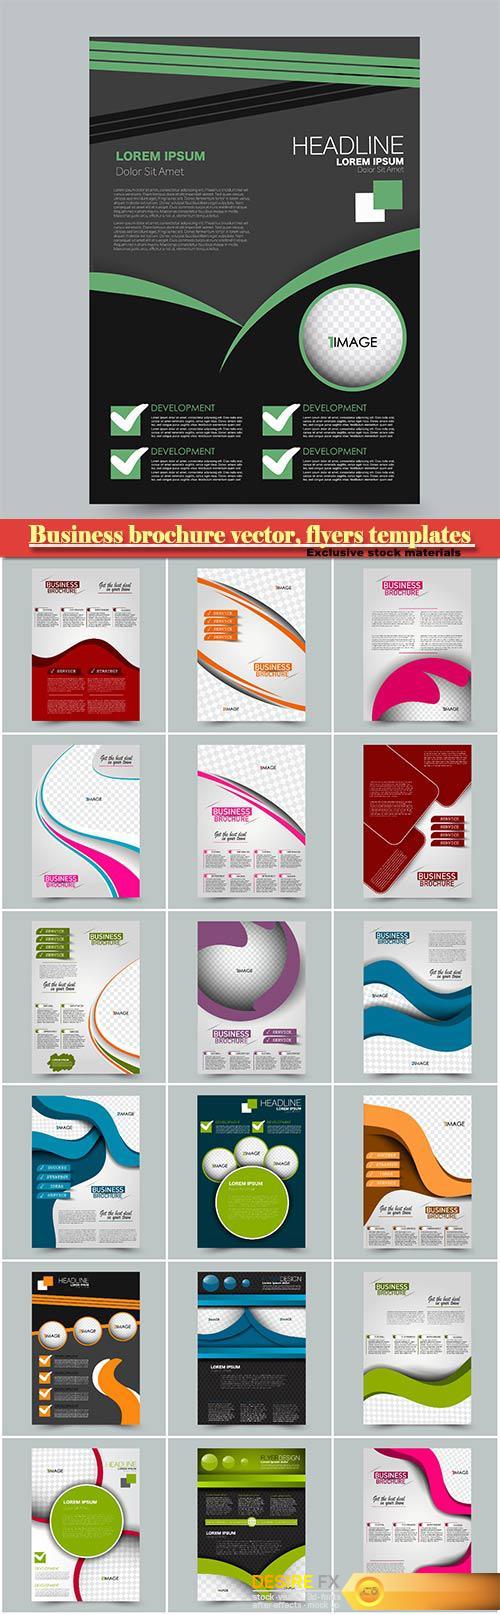 Business brochure vector, flyers templates # 40